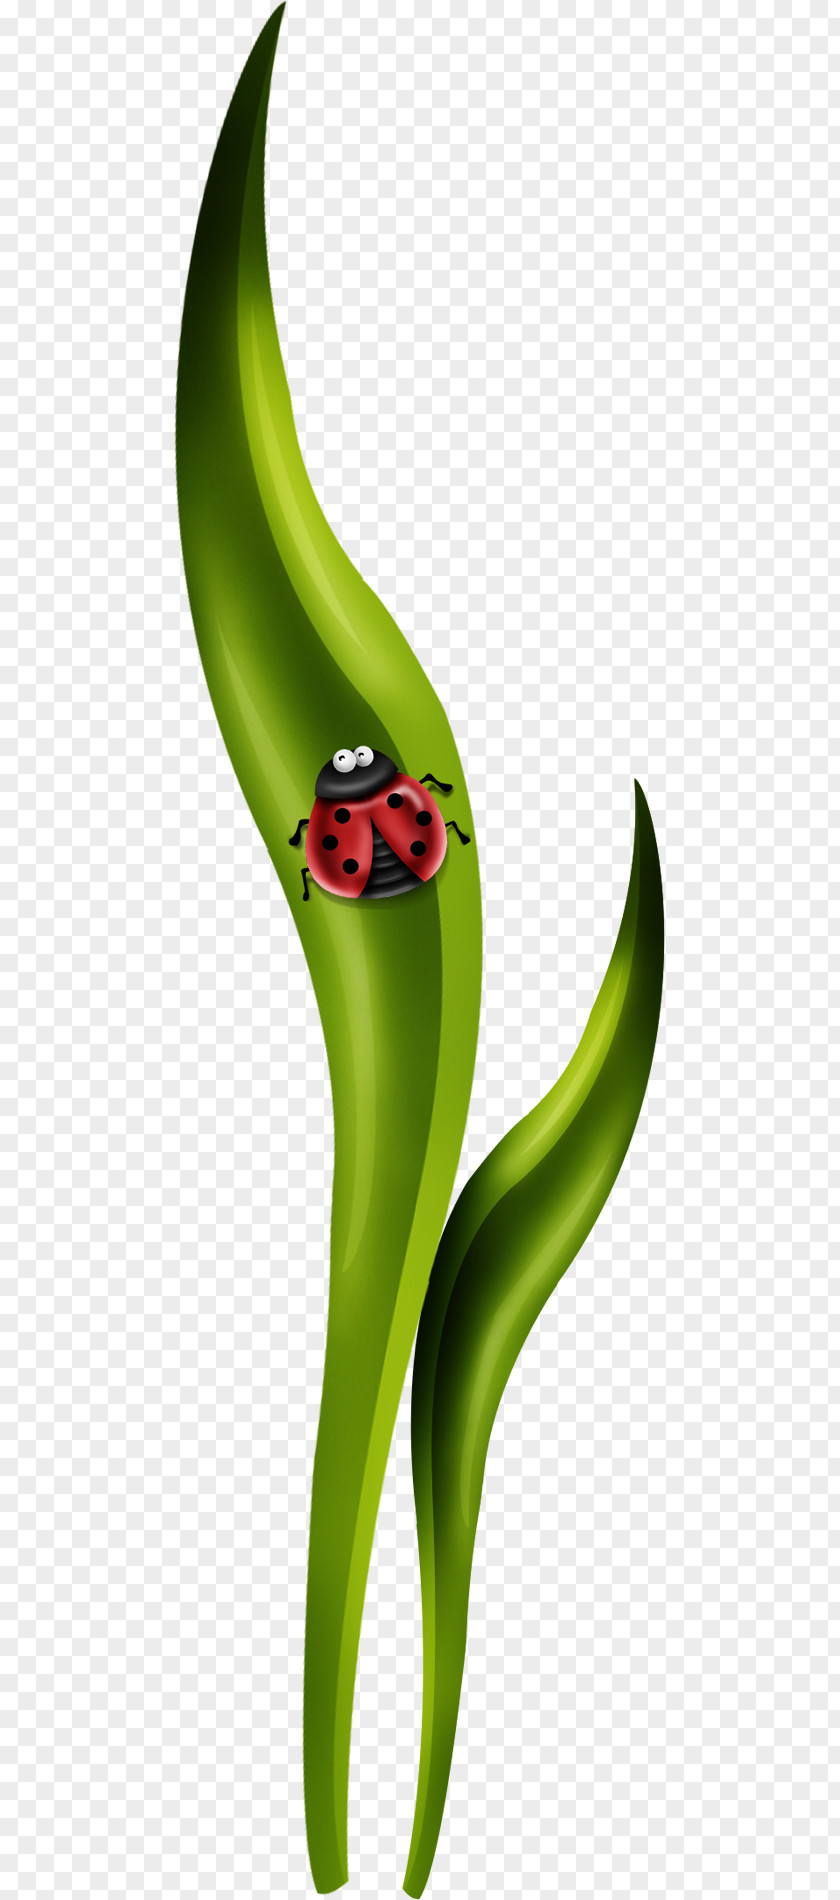 Creative Green Leaves Ladybug Cartoon PNG